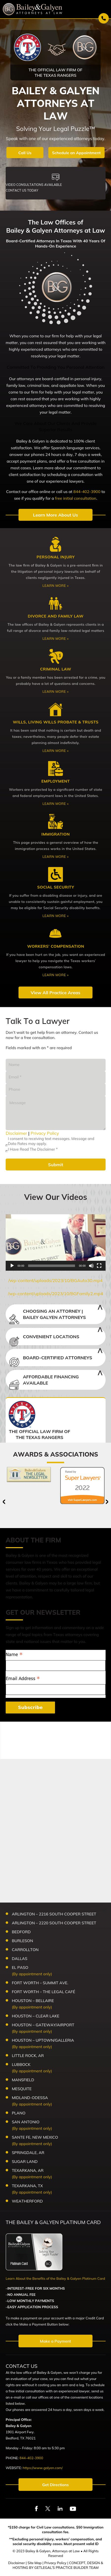 Bailey & Galyen, Attorneys at Law - Houston TX Lawyers